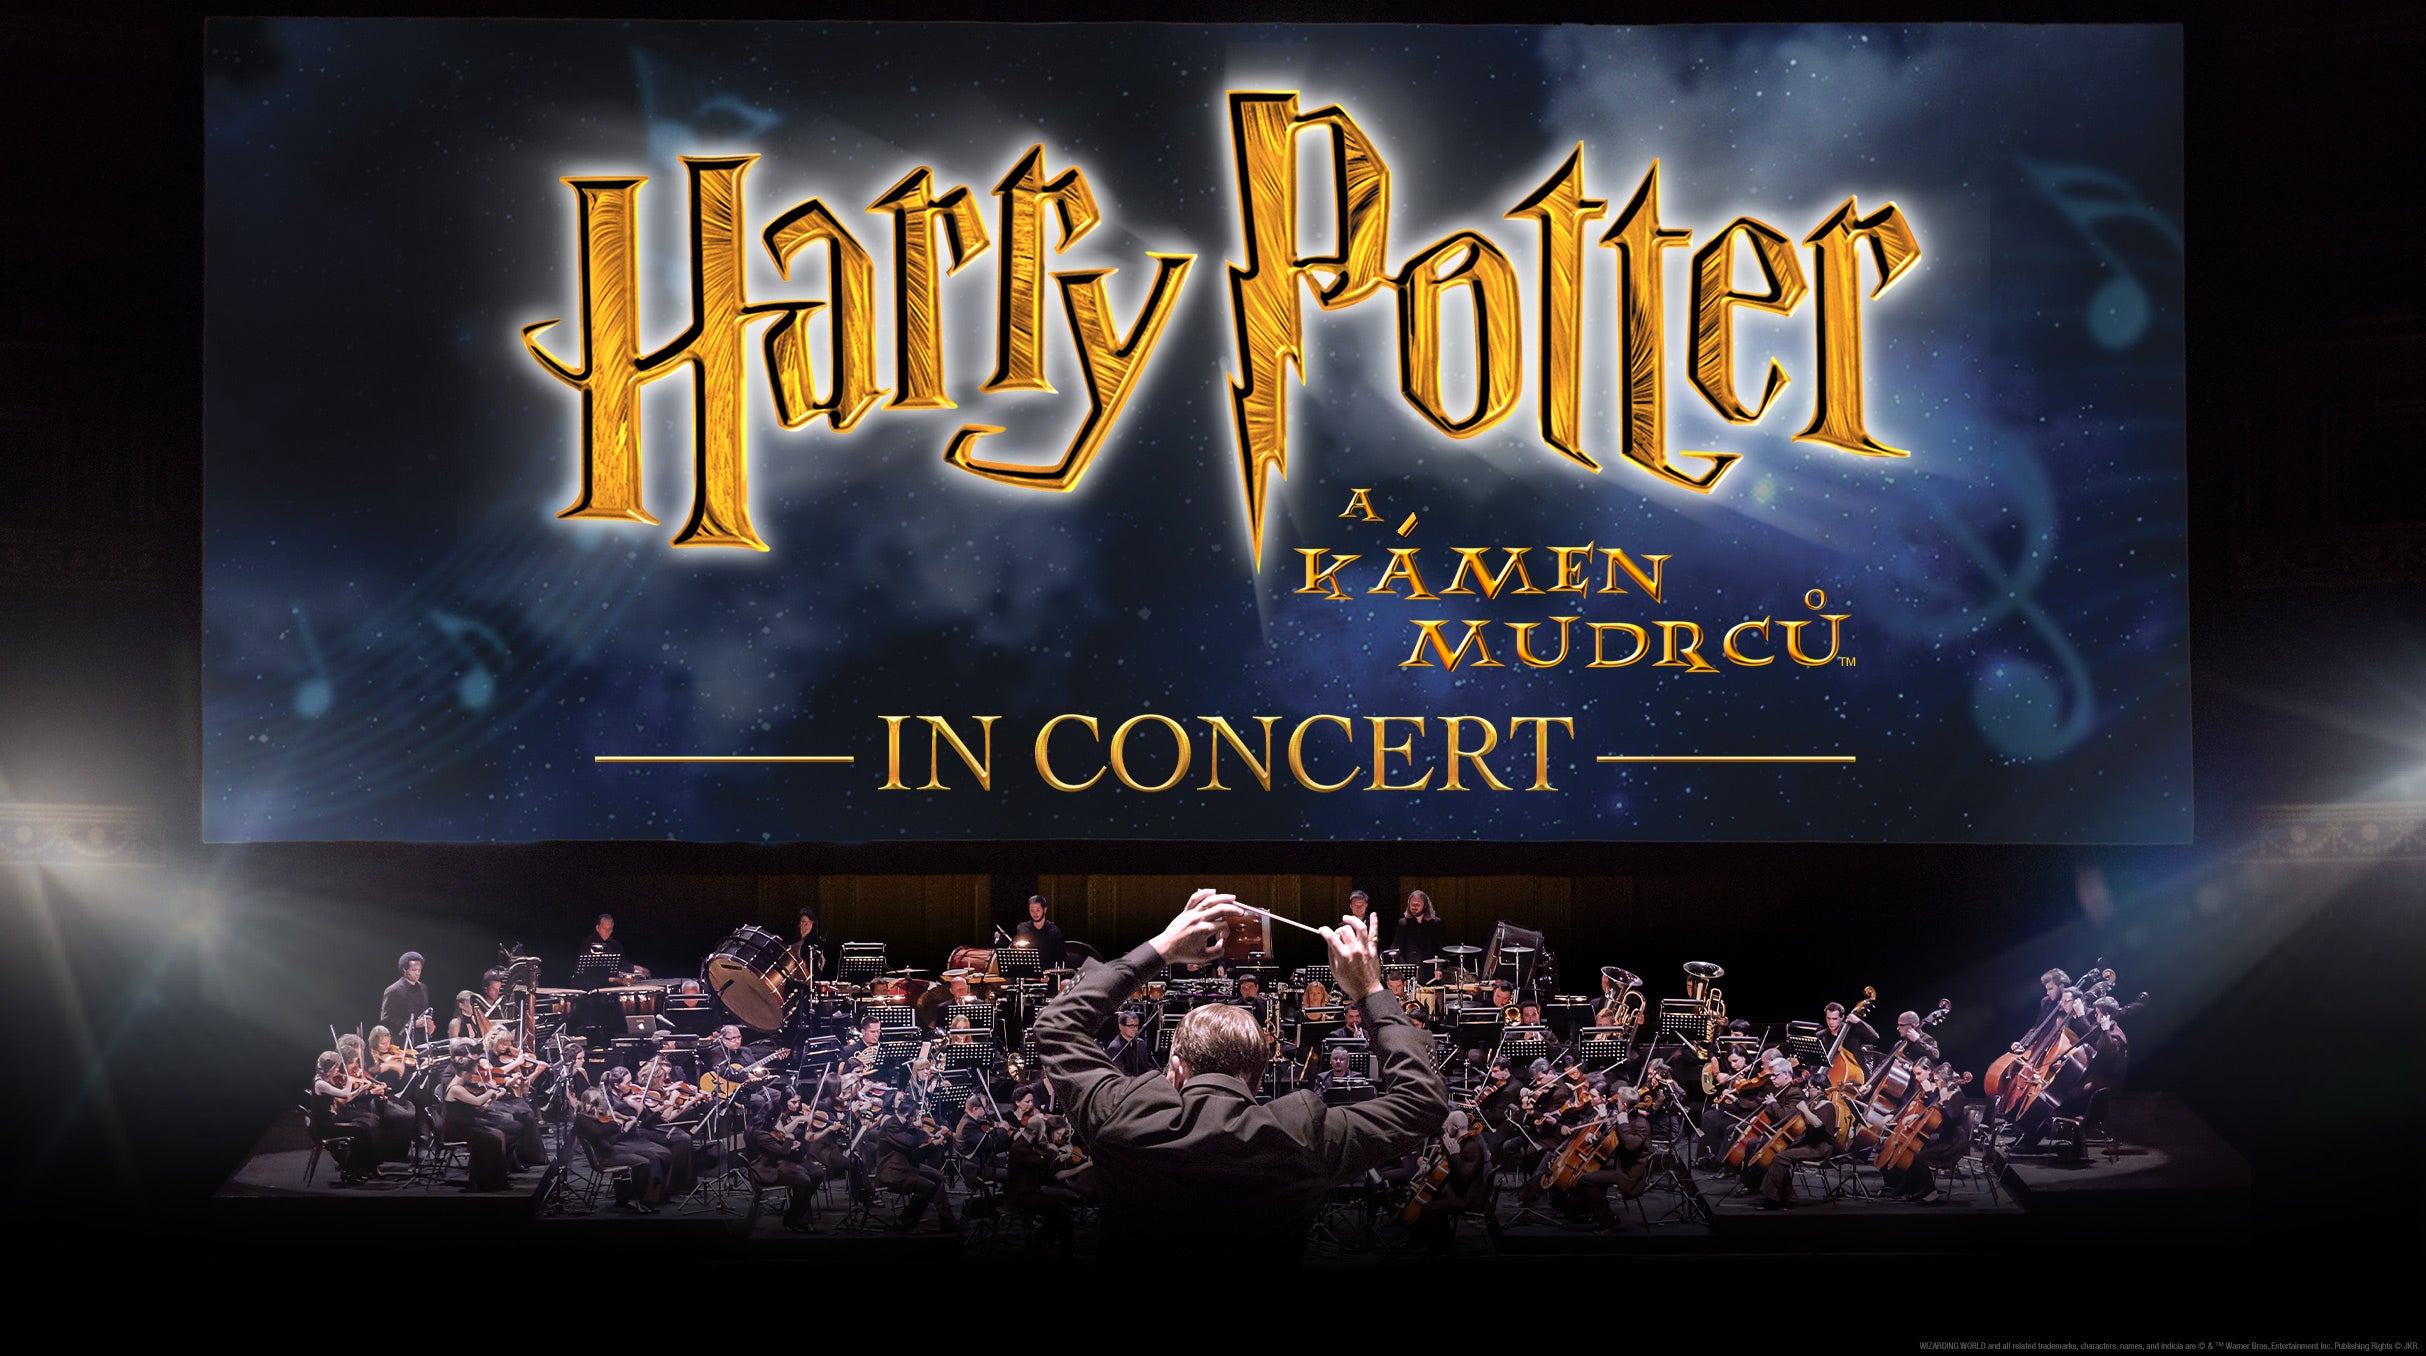 Harry Potter a Kámen mudrců™ in Concert- Praha -O2 universum Praha 9 Českomoravská 2345/17, Praha 9 19000